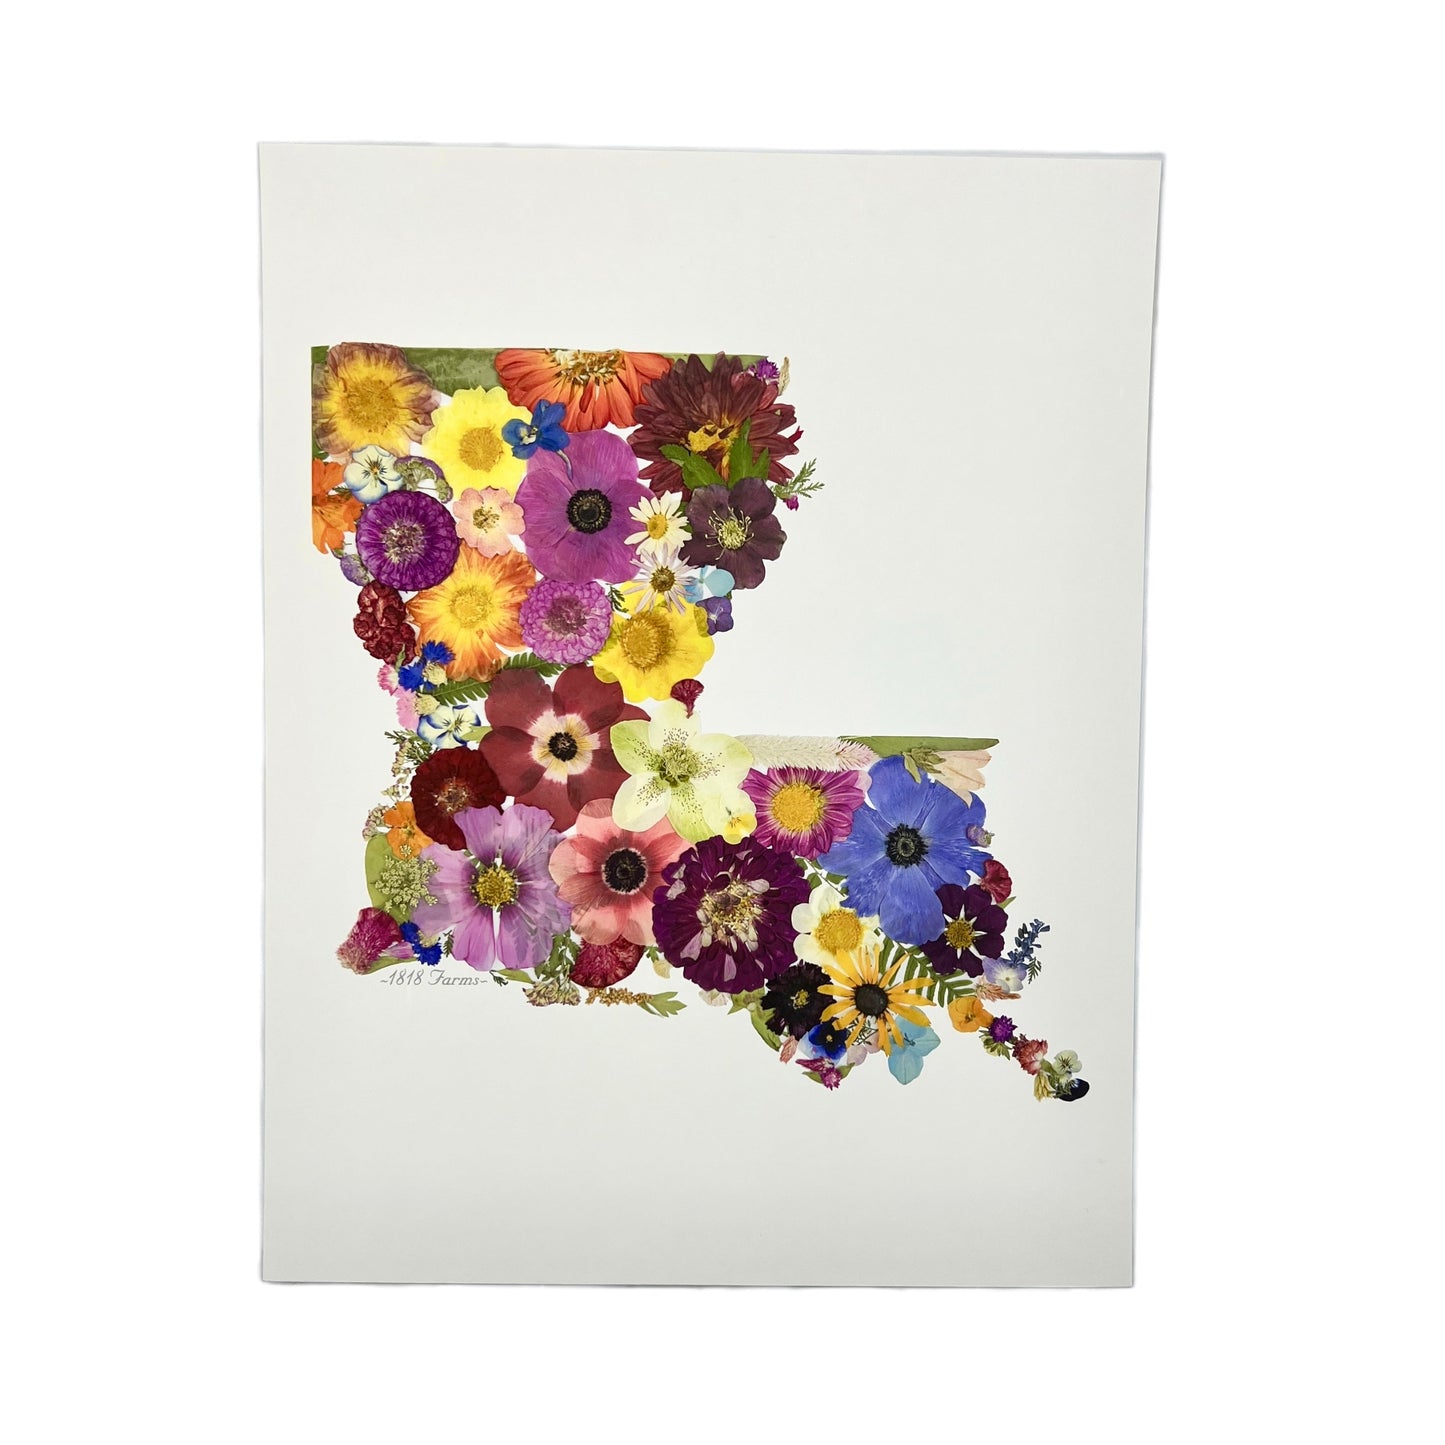 State Themed Giclée Print  - "Where I Bloom" Collection Giclee Art Print 1818 Farms 8"x10" Louisiana 